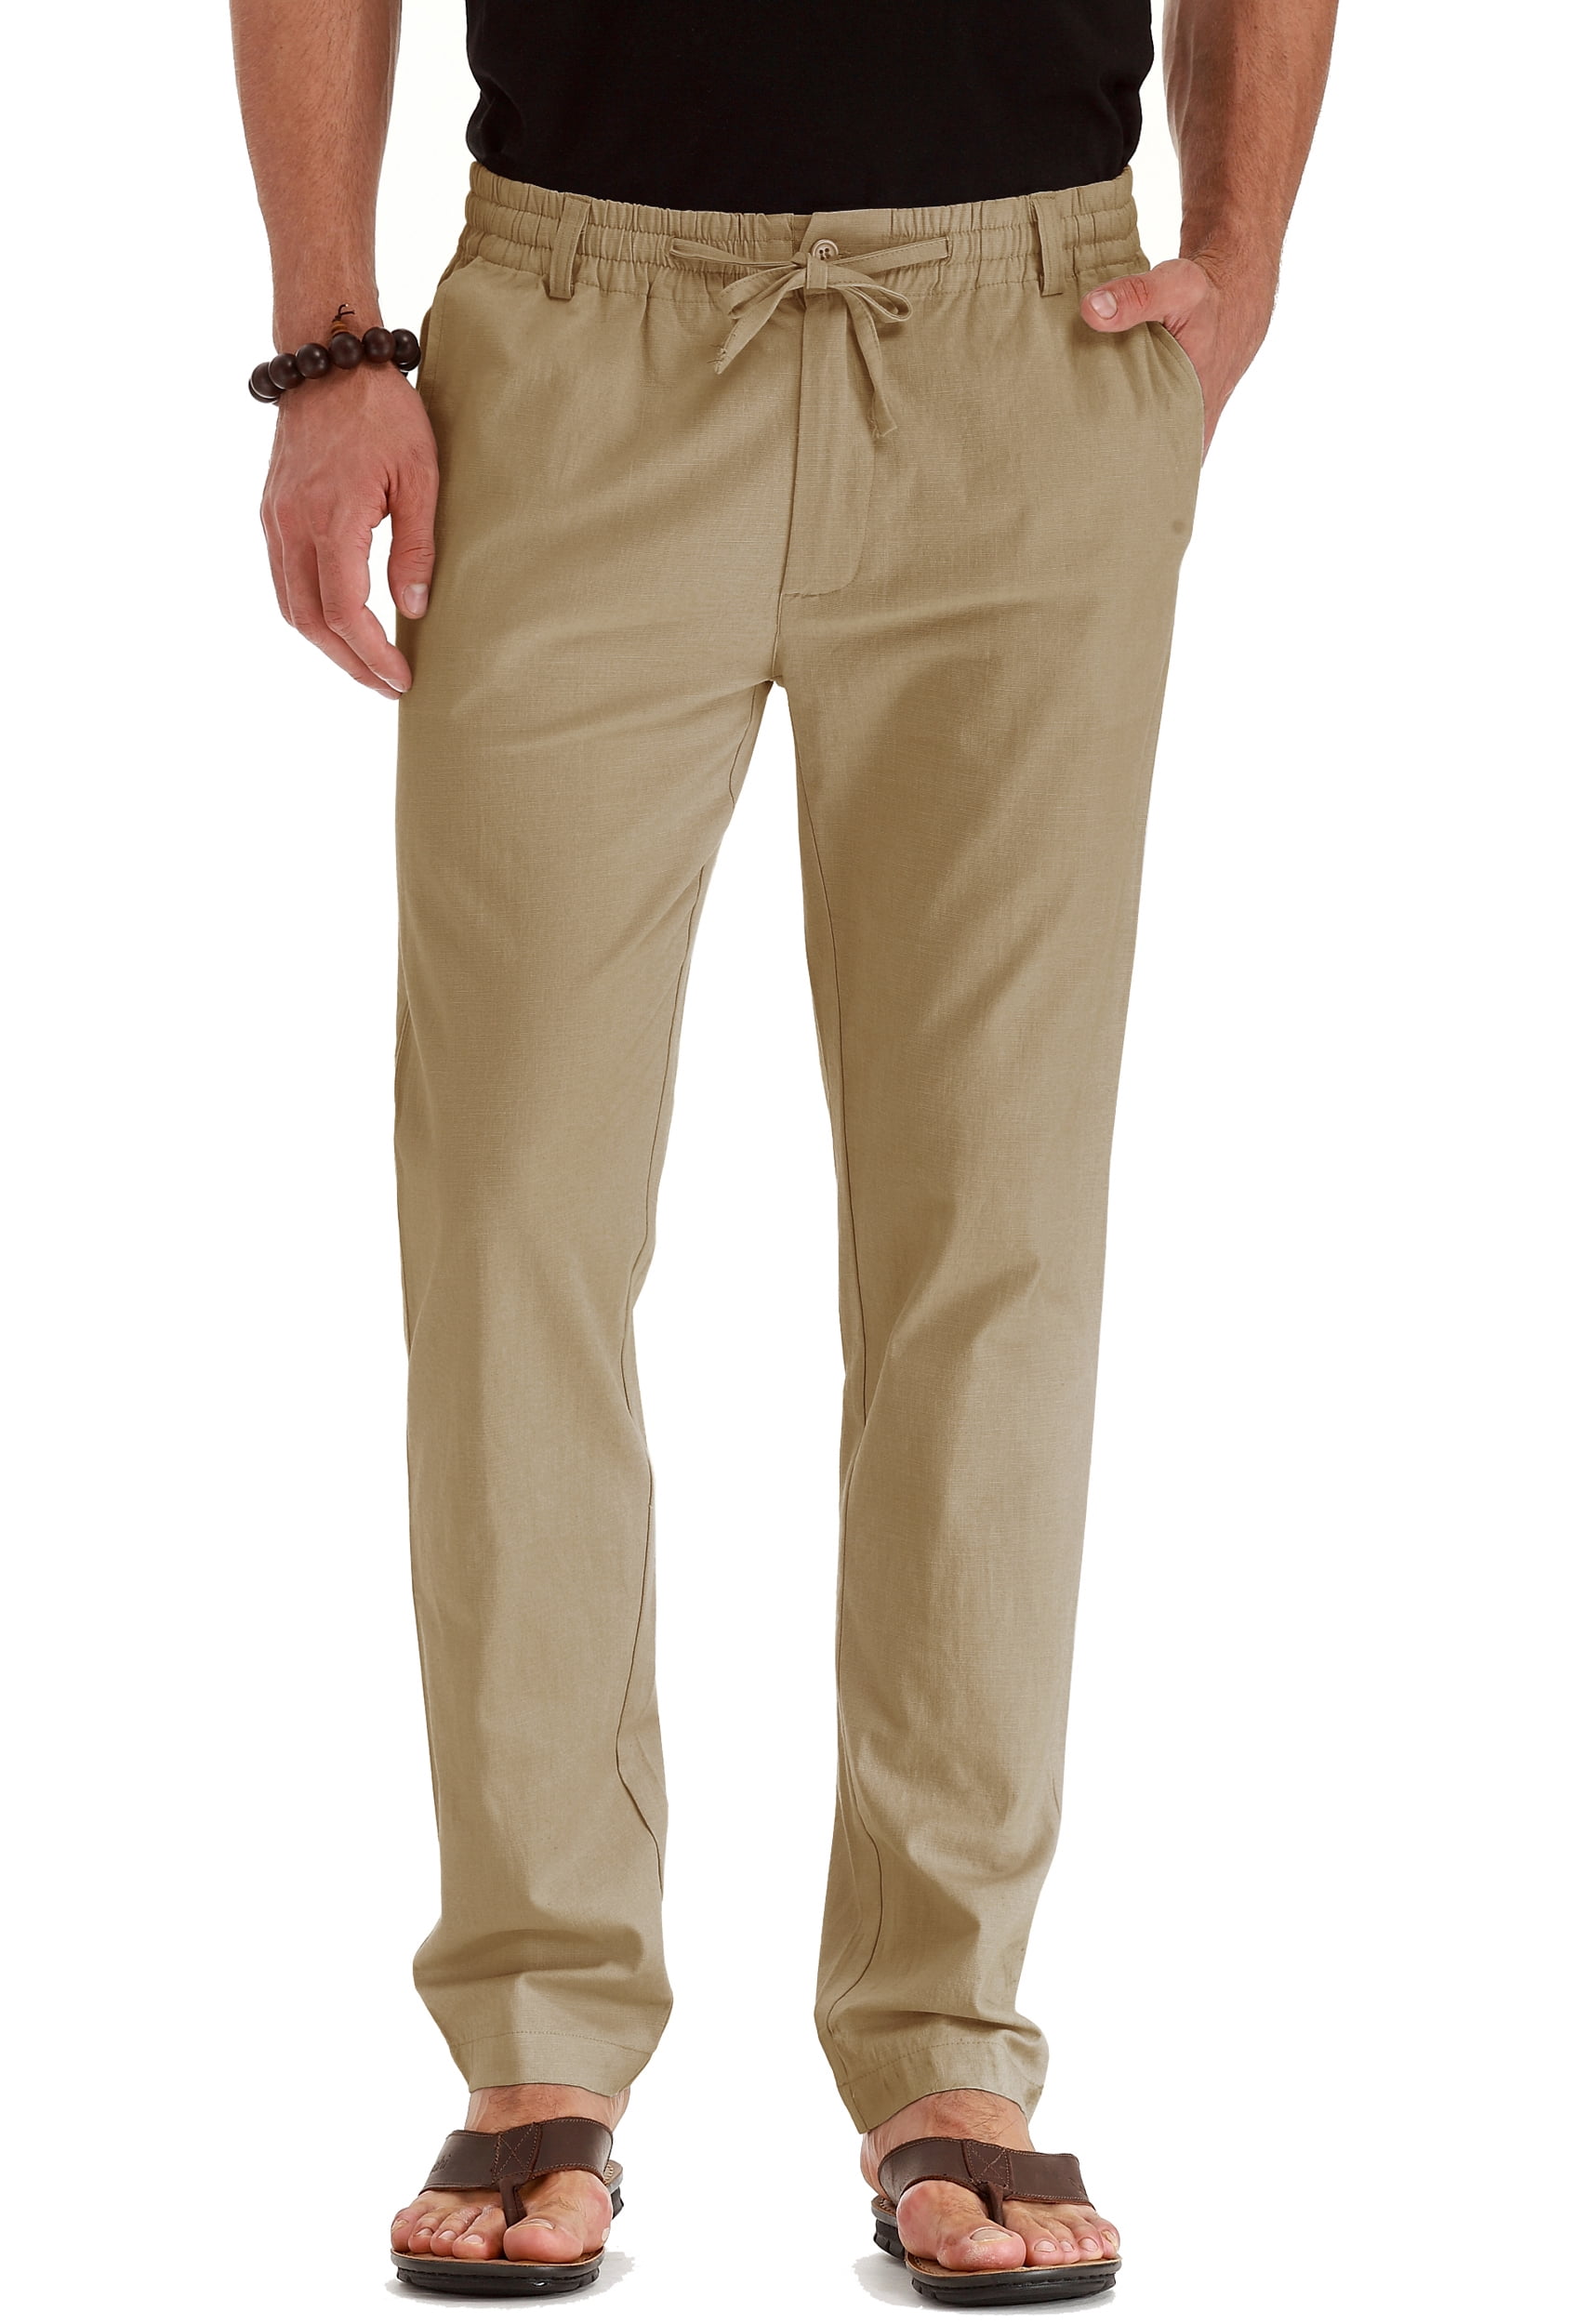 JWD Men's Drawstring Linen Pants Casual Summer Beach Loose Trousers Gray Khaki-US 34